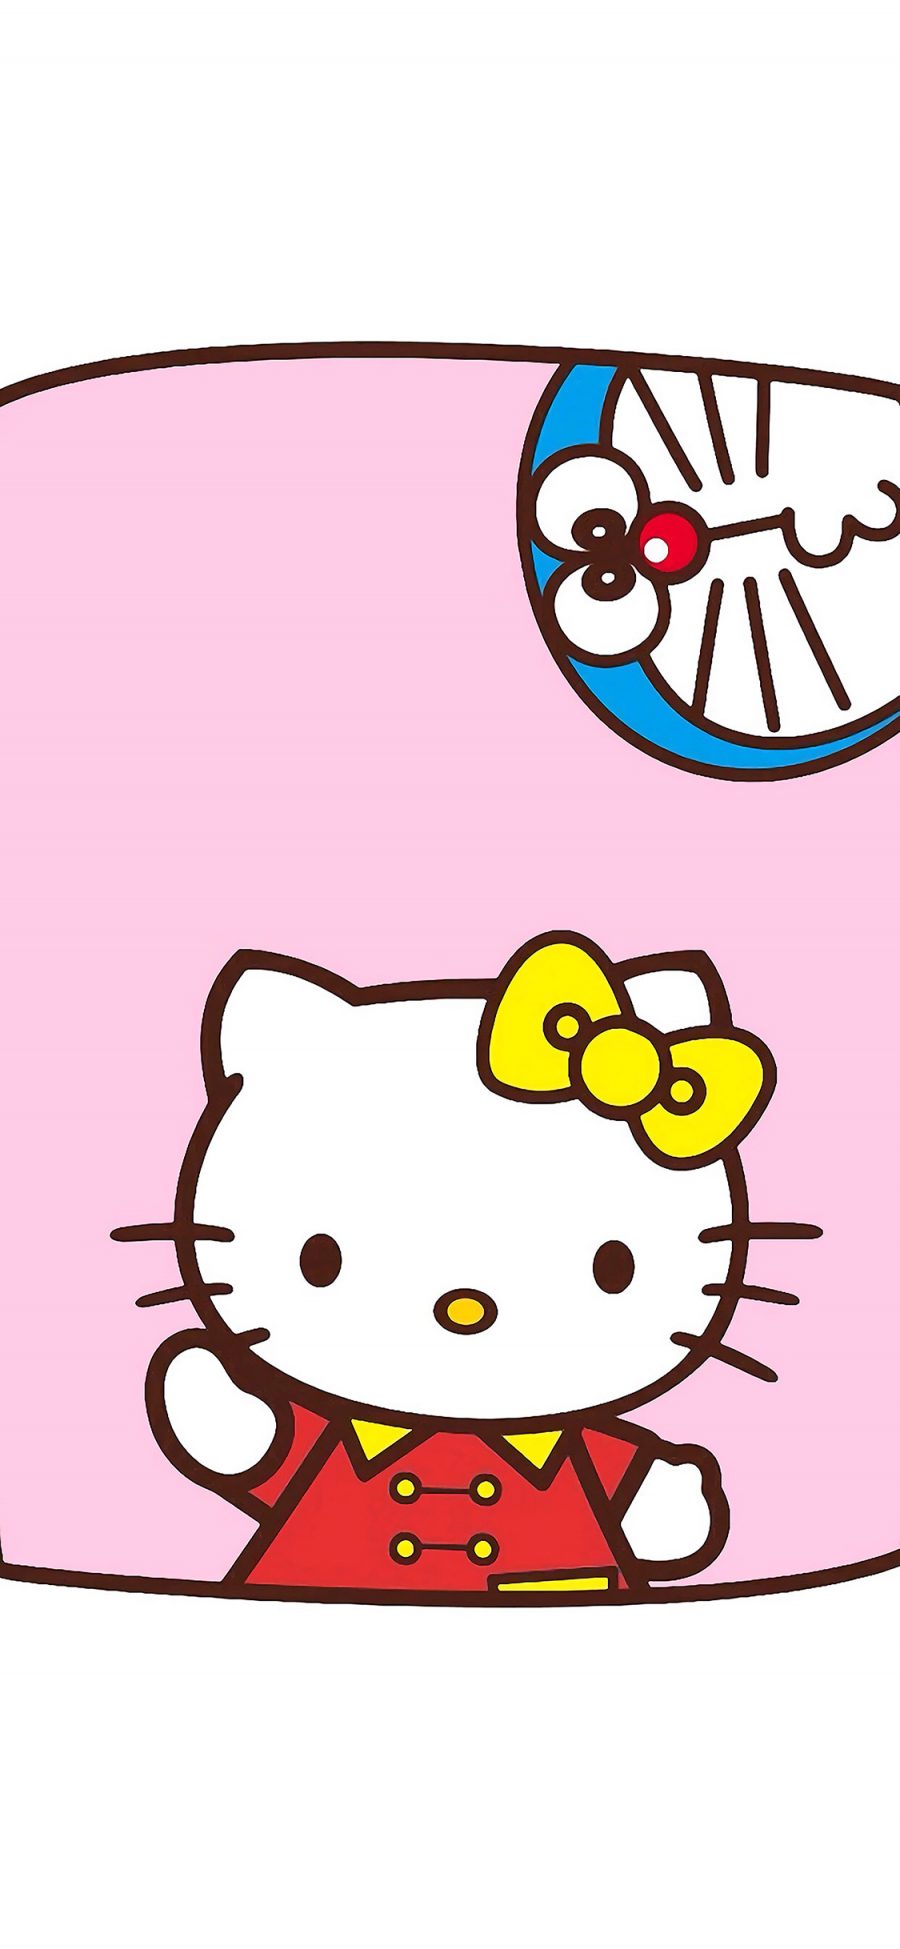 [2436×1125]Hello Kitty 凯特猫 粉色 哆啦A梦 苹果手机动漫壁纸图片